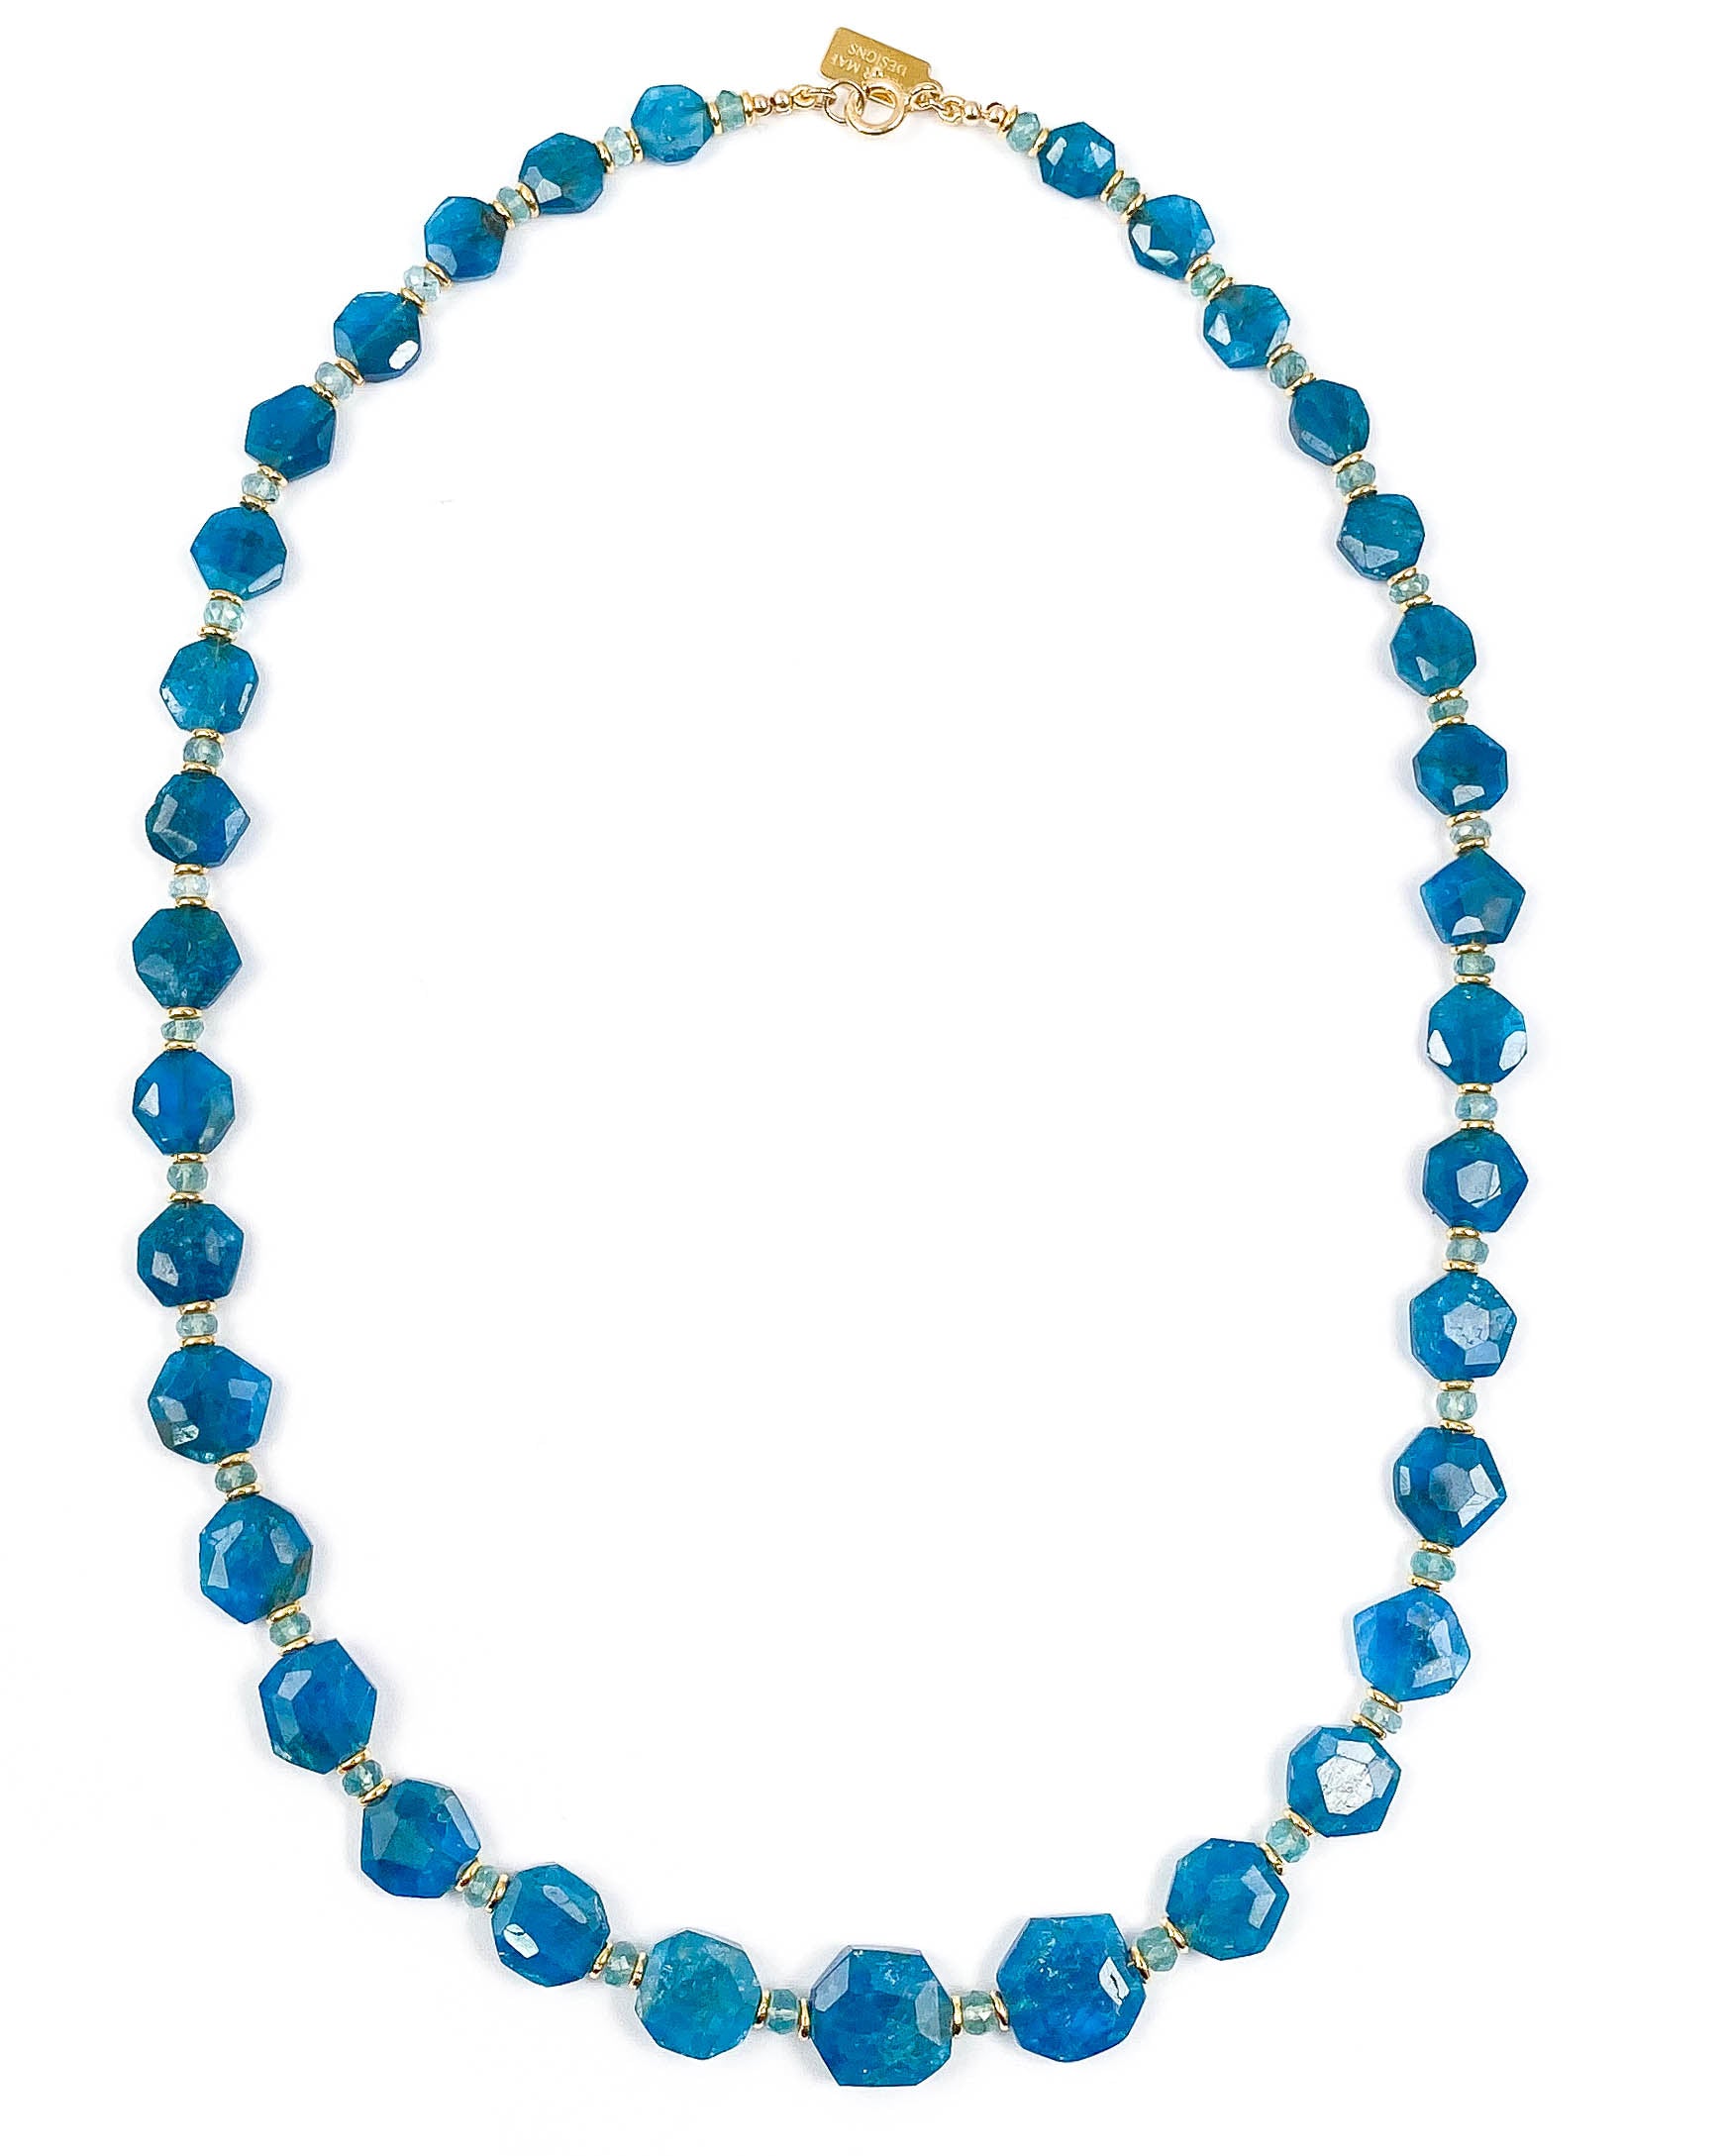 Octagonal Ocean Blue Apatite Statement Necklace